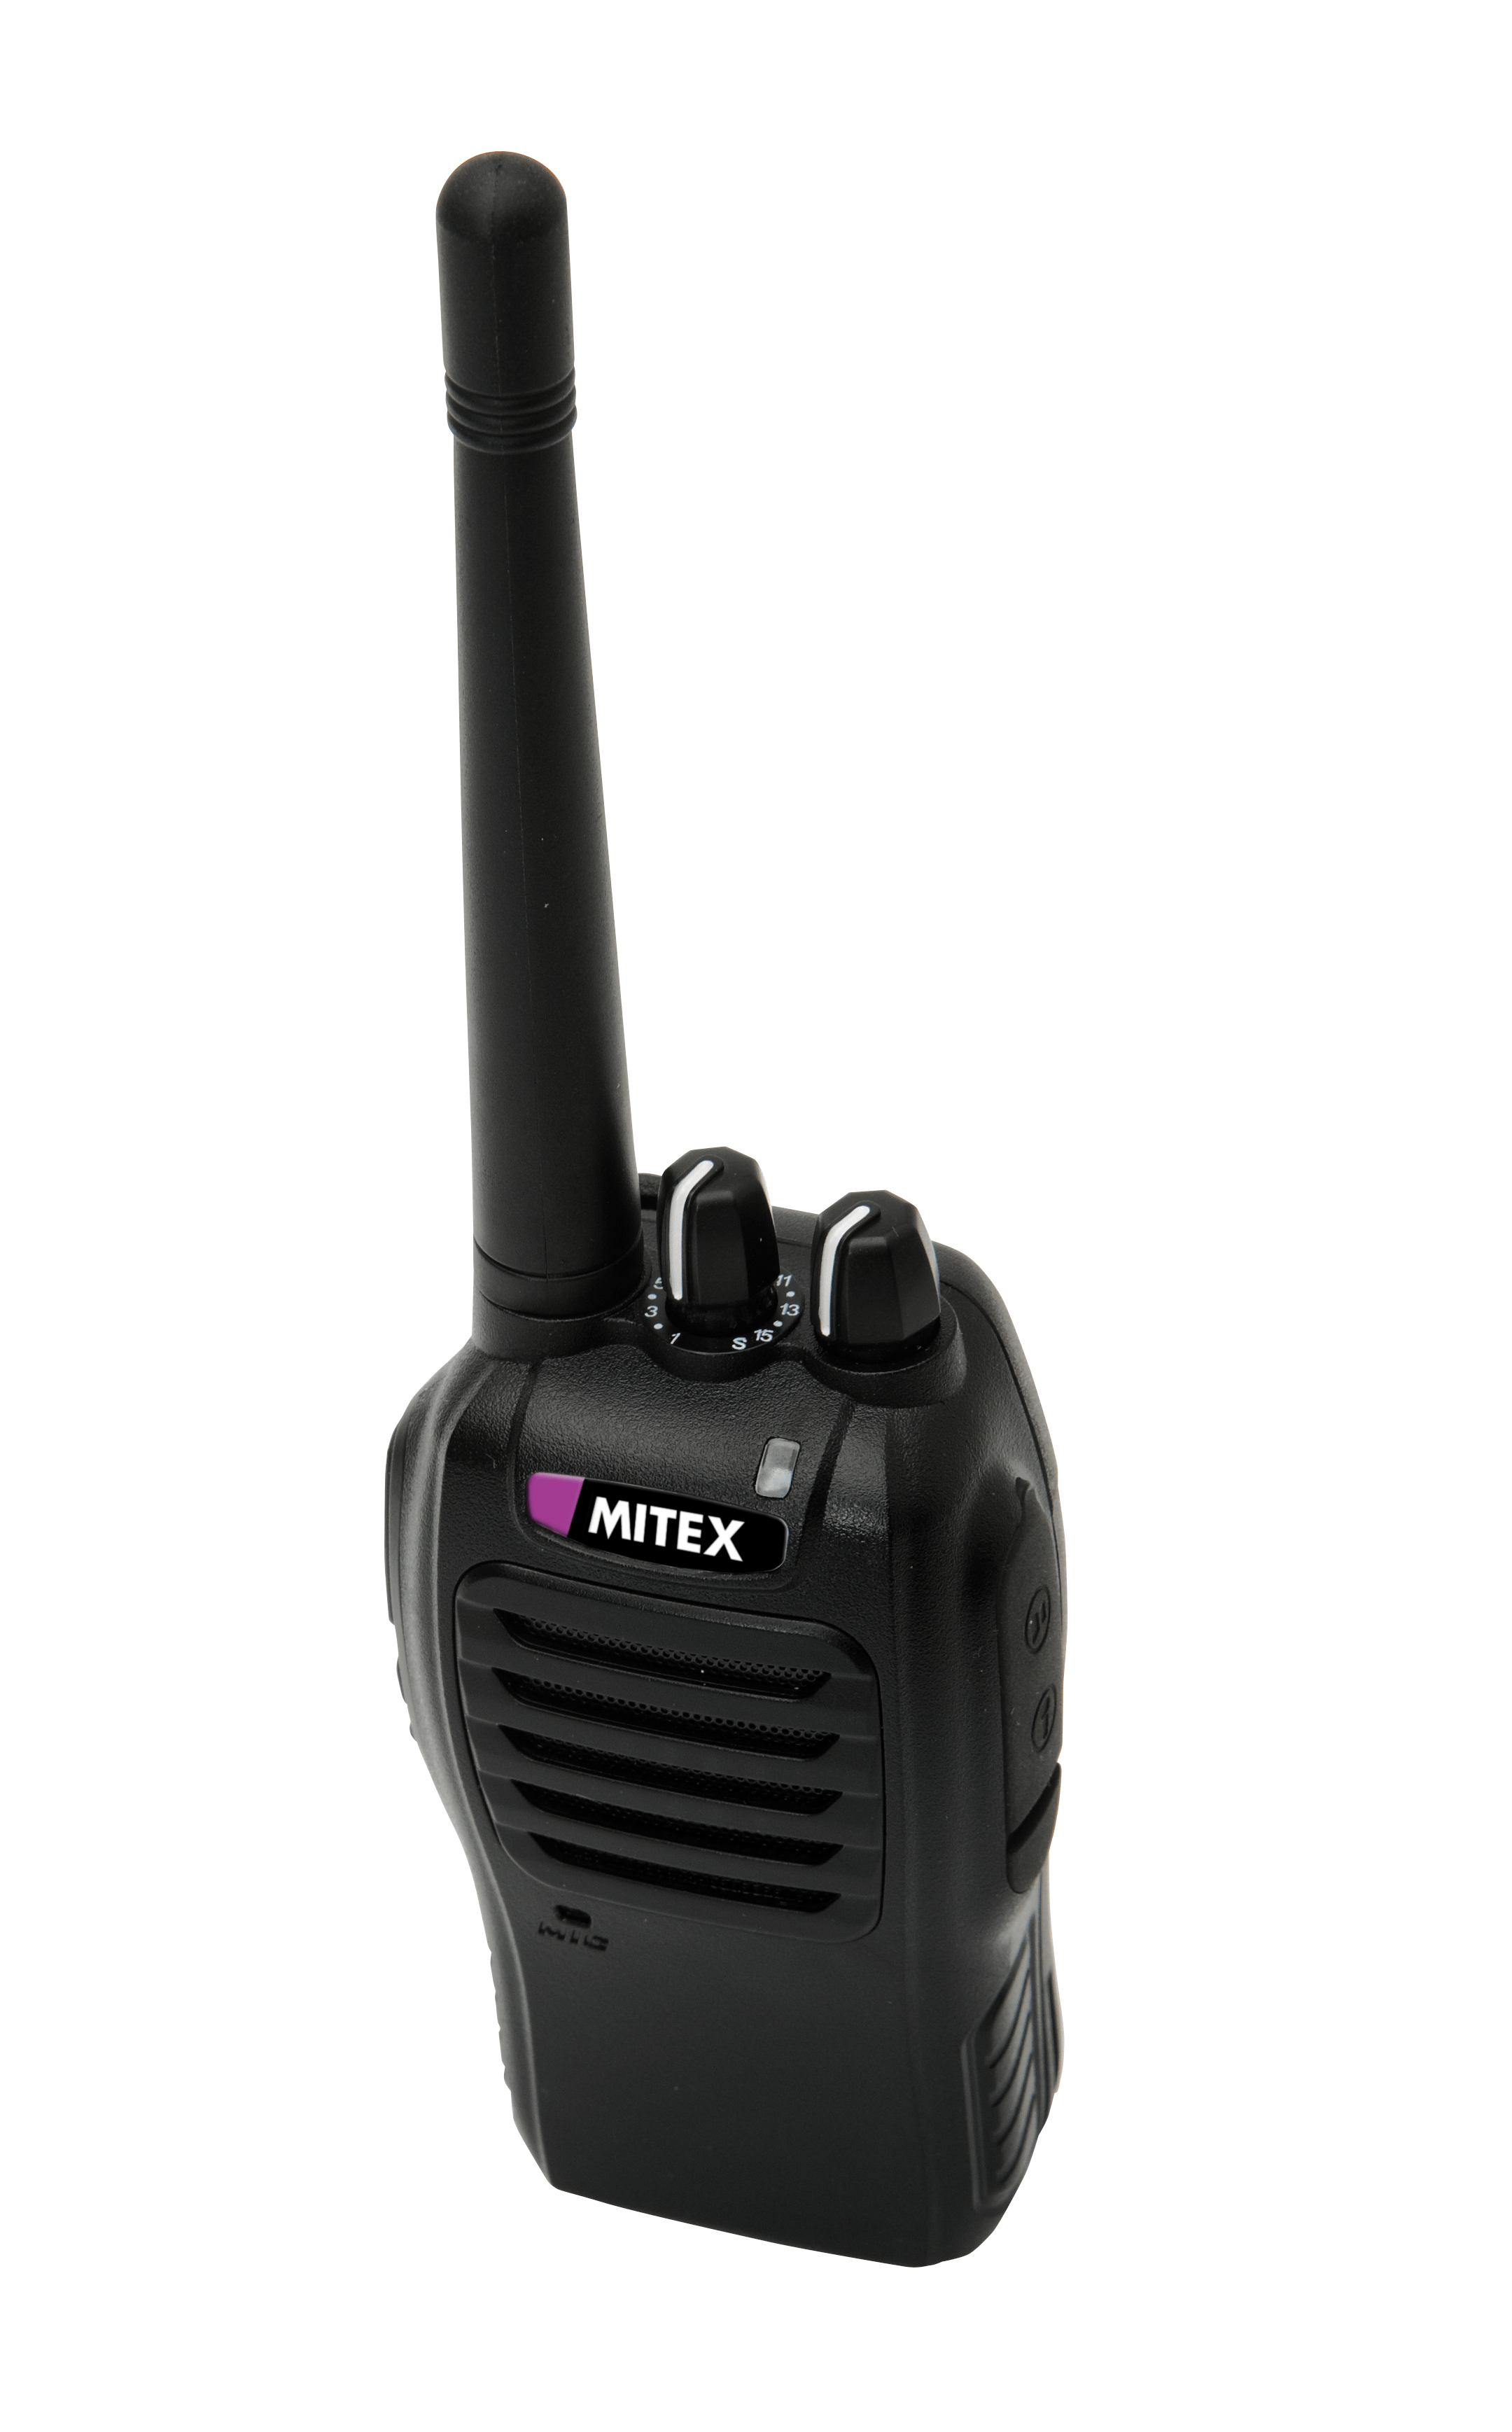 Mitex Sports VHF licensed handheld radio 